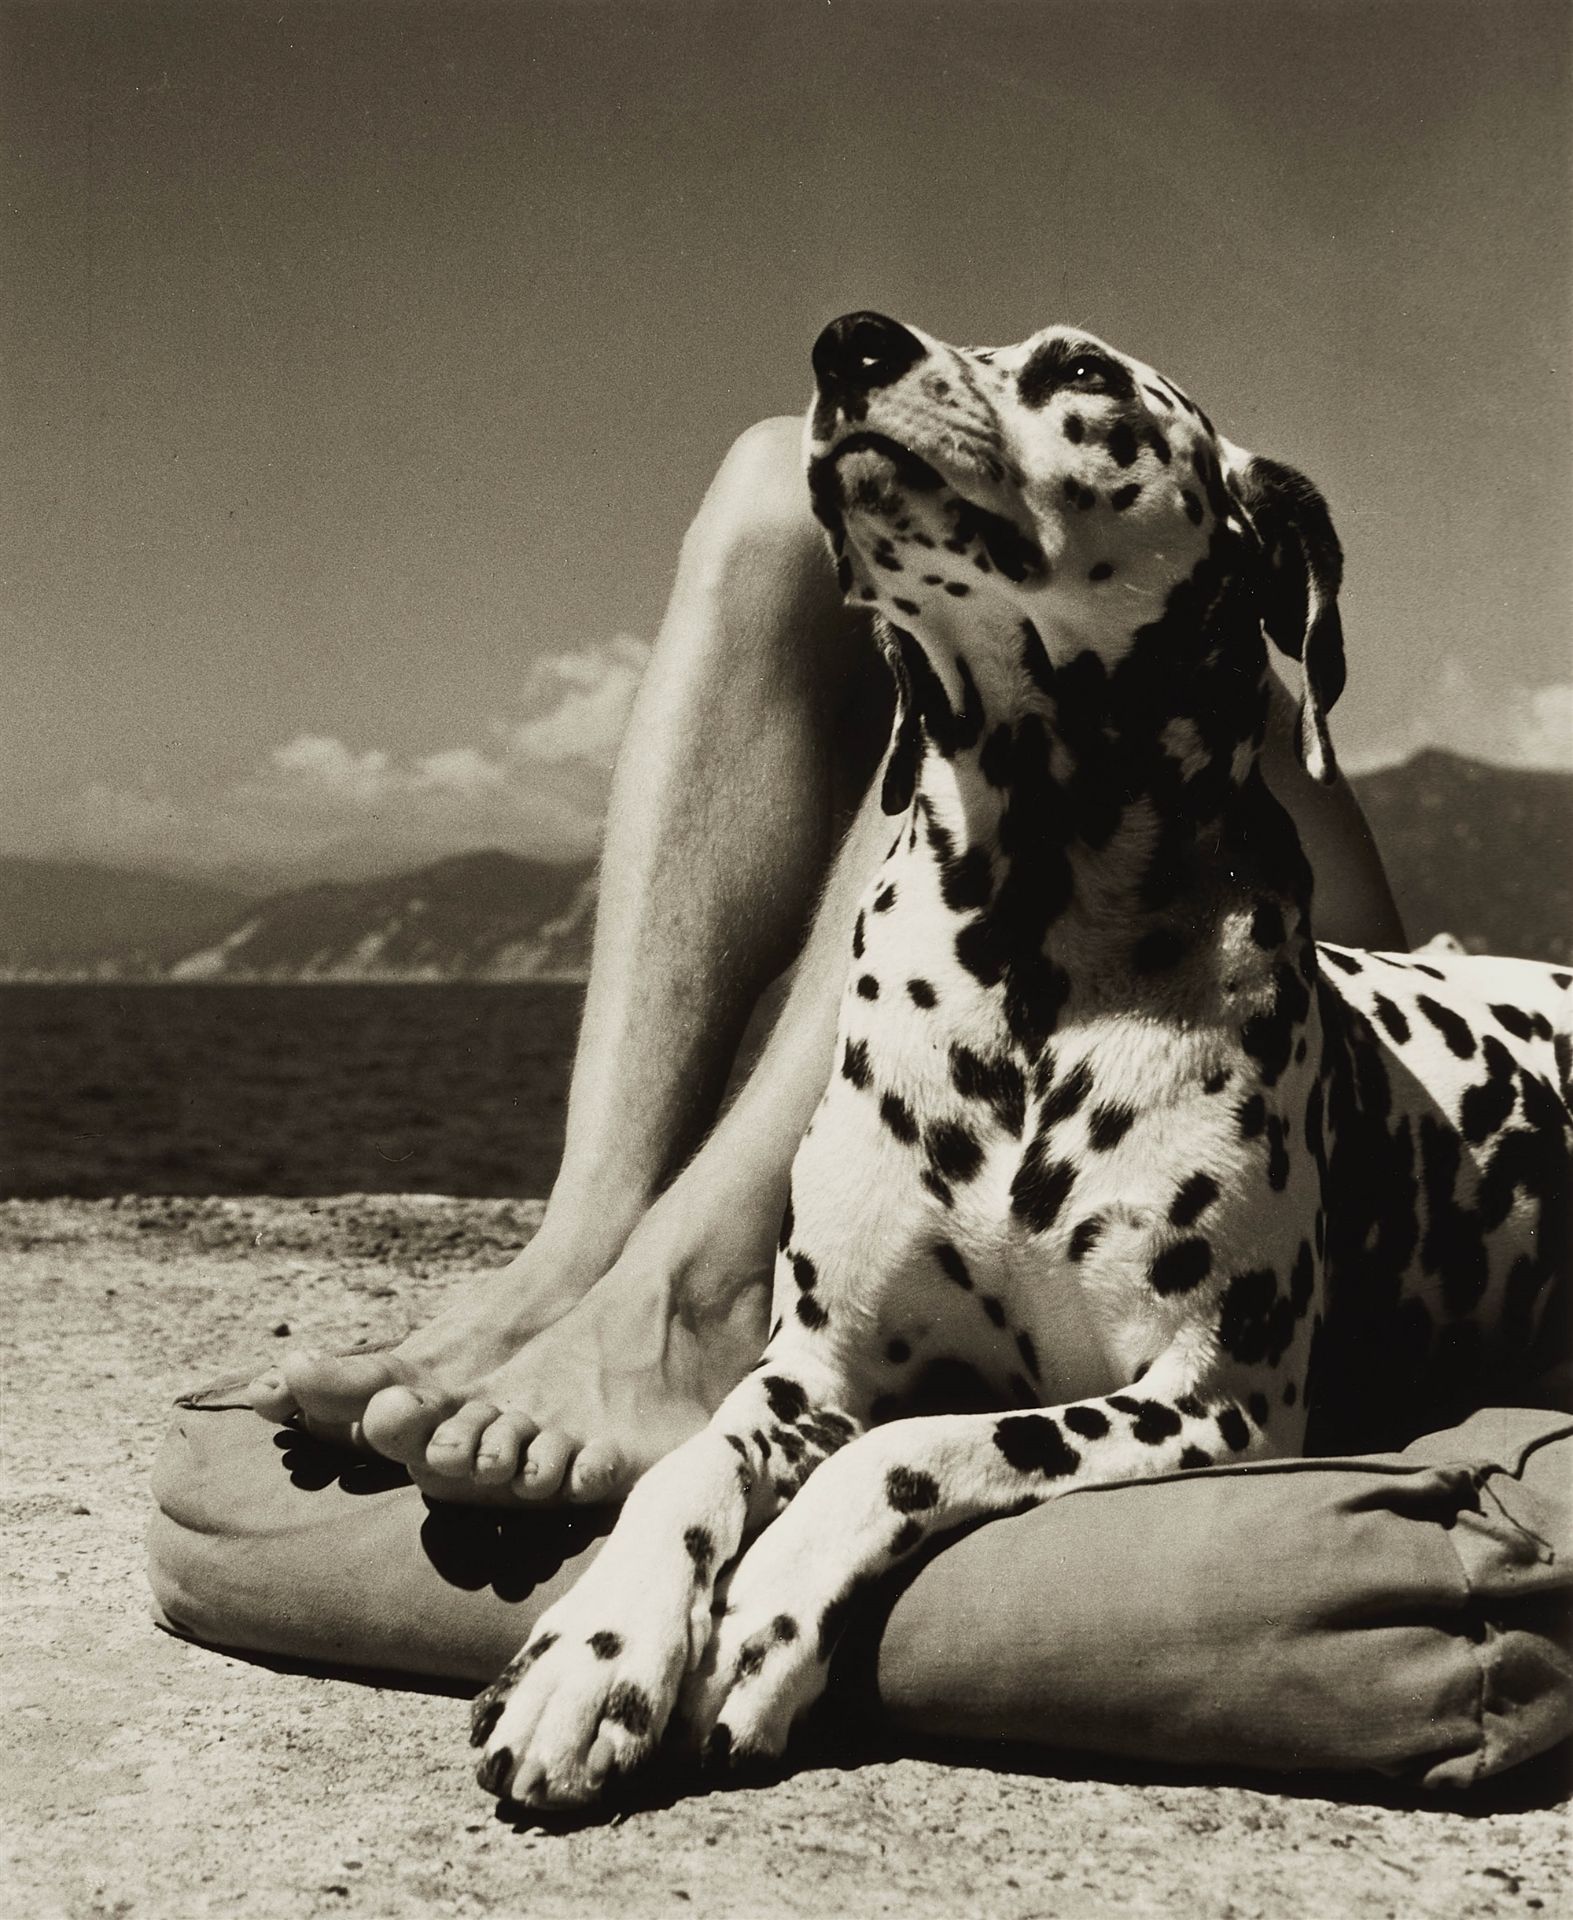 Herbert List, Master and Dog, Portofino